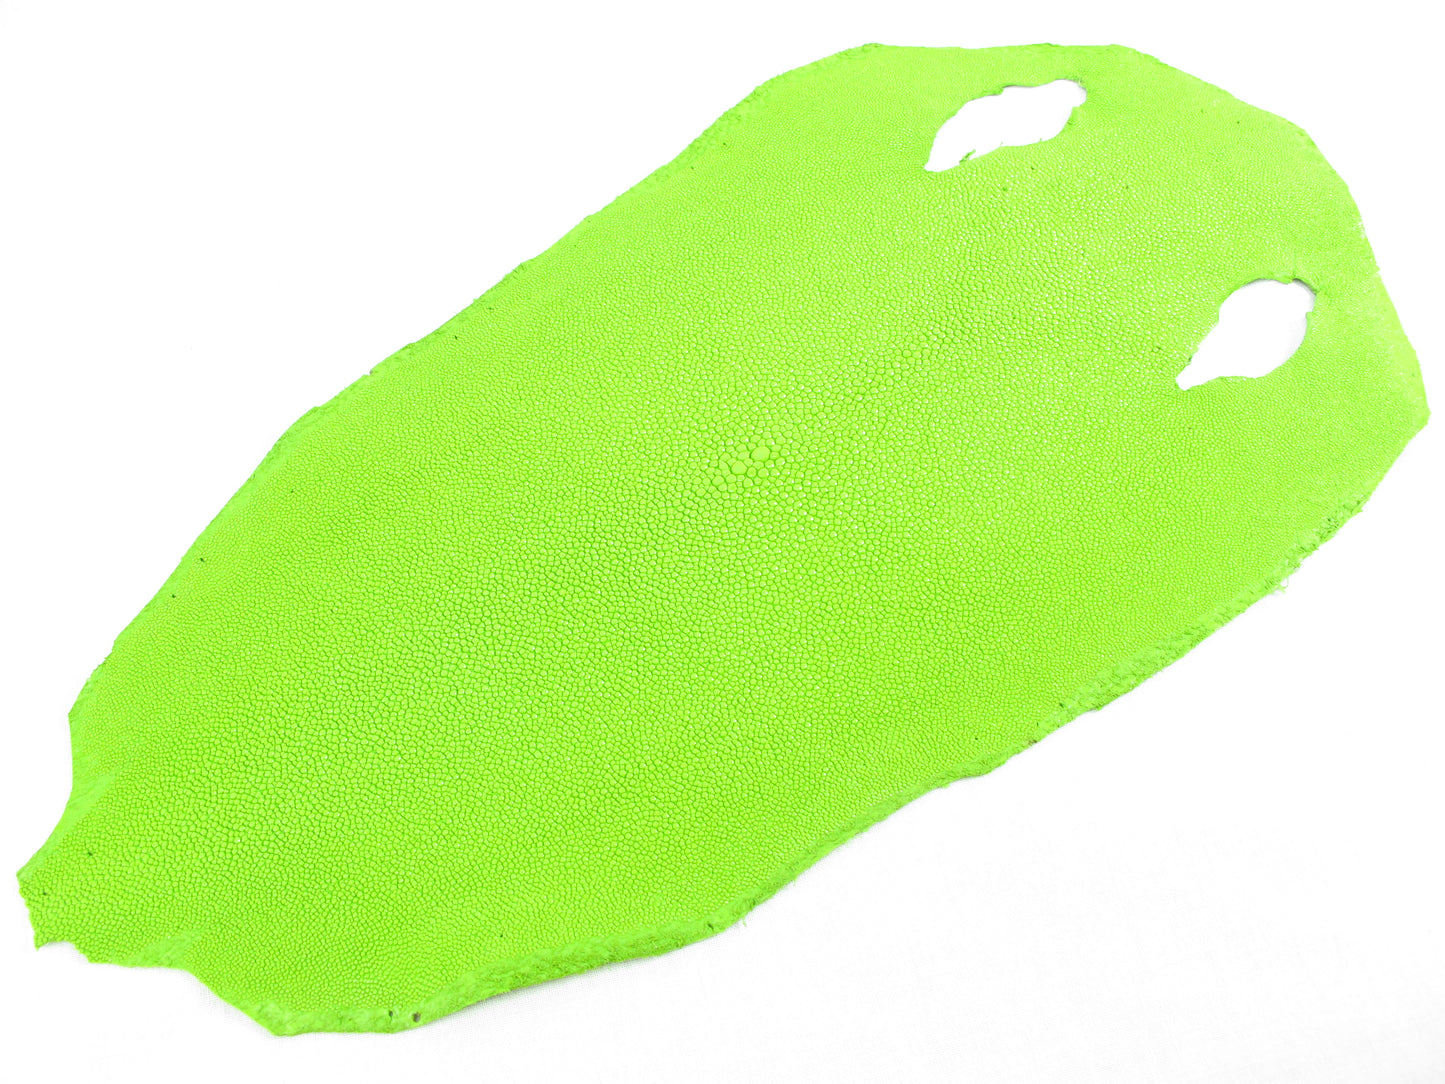 Genuine Stingray Skin Leather Round Shape Hide Pelt Neon Green